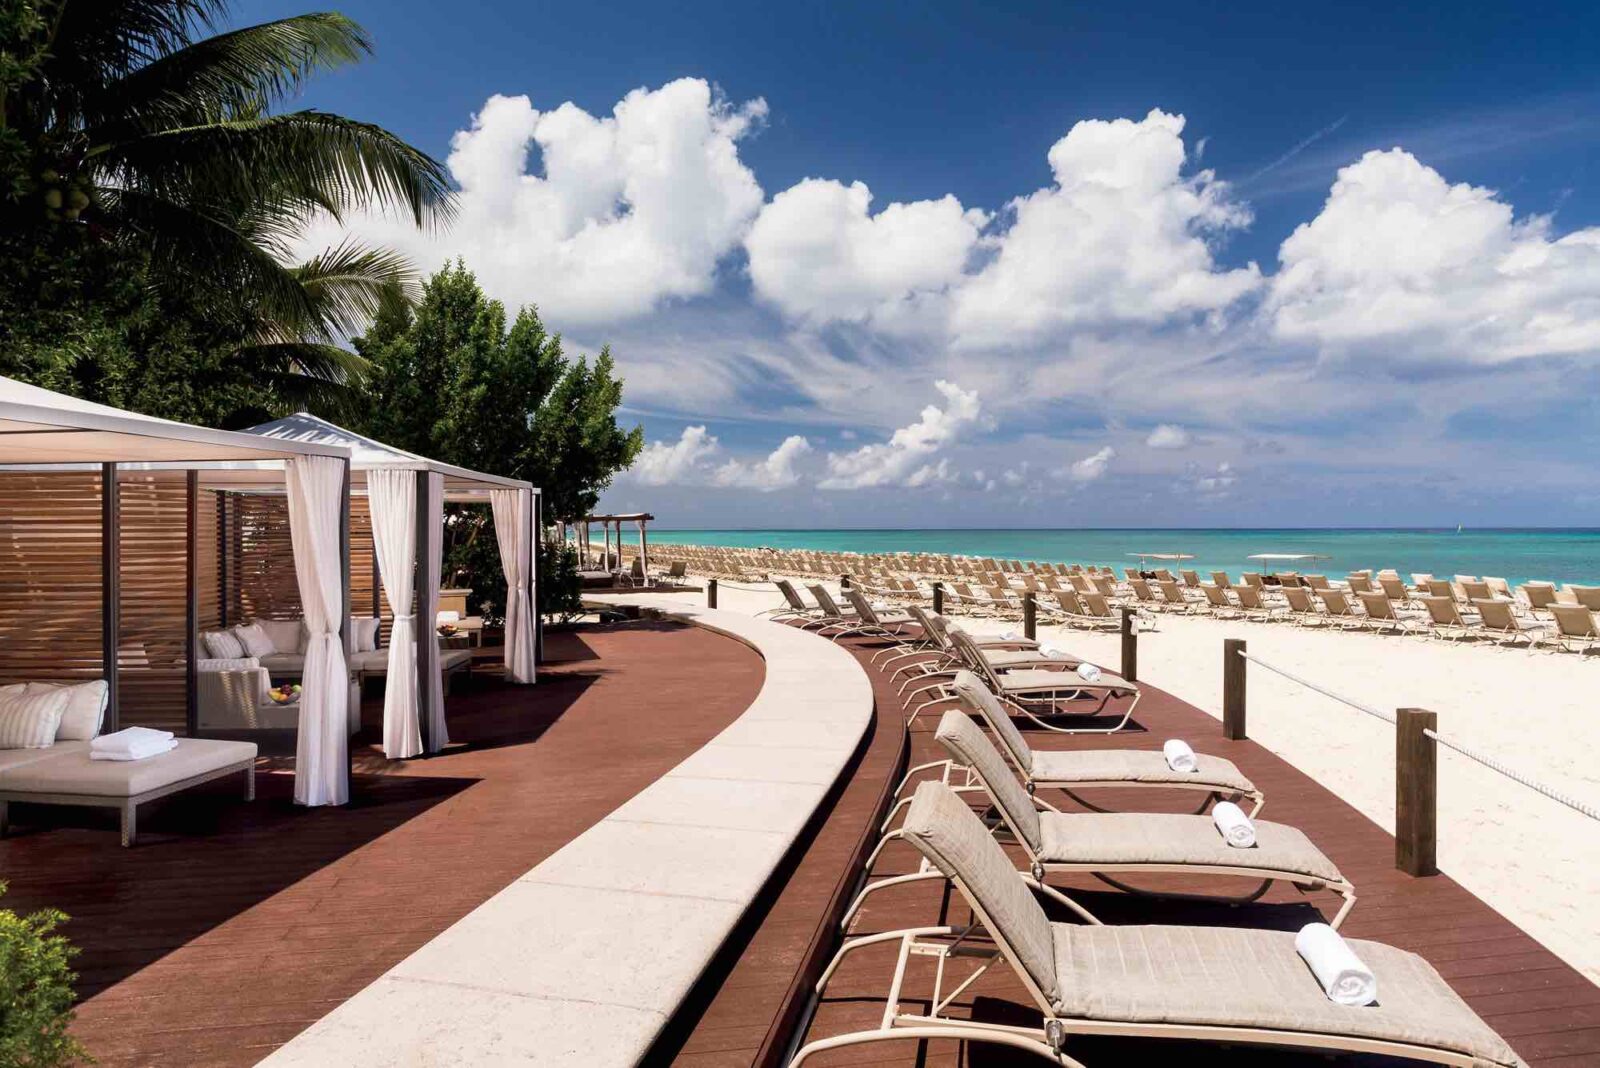 Luxury Hotels in Cayman Islands Ritz Carlton beach and cabanas